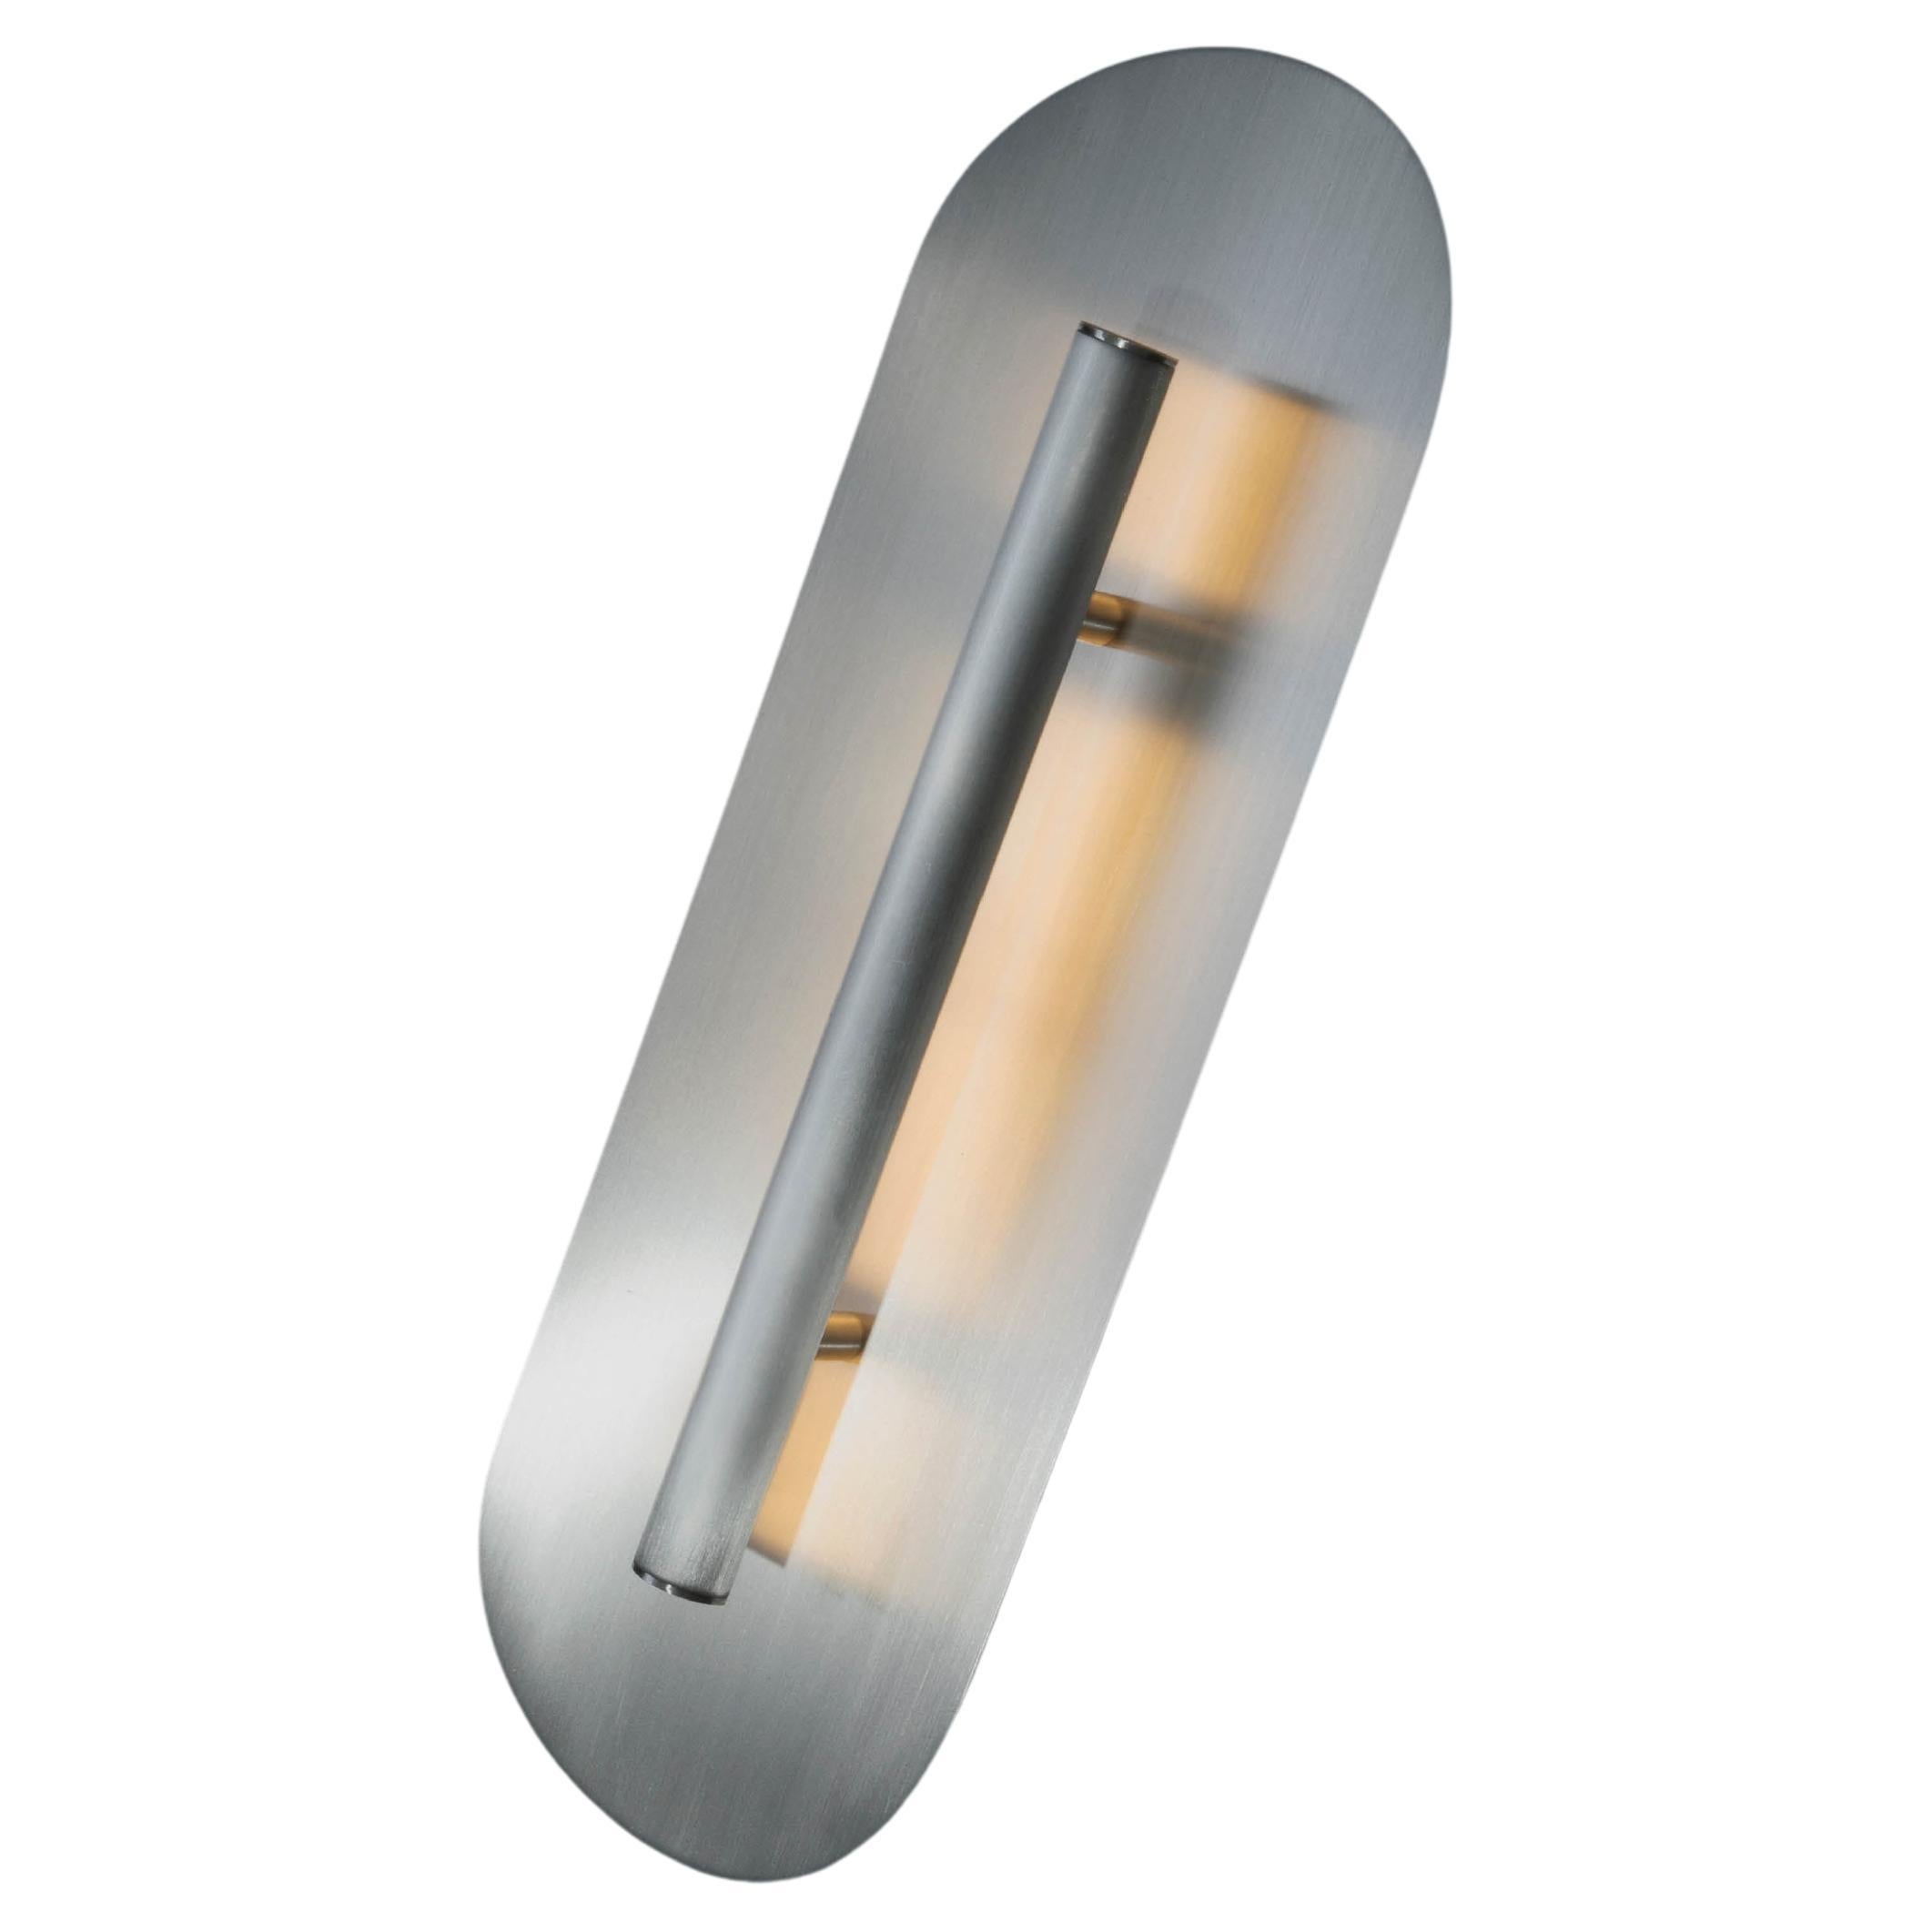 Reflektor-Wandleuchte 450, LED-Leuchte, Roh gebürstetes Aluminium Metall